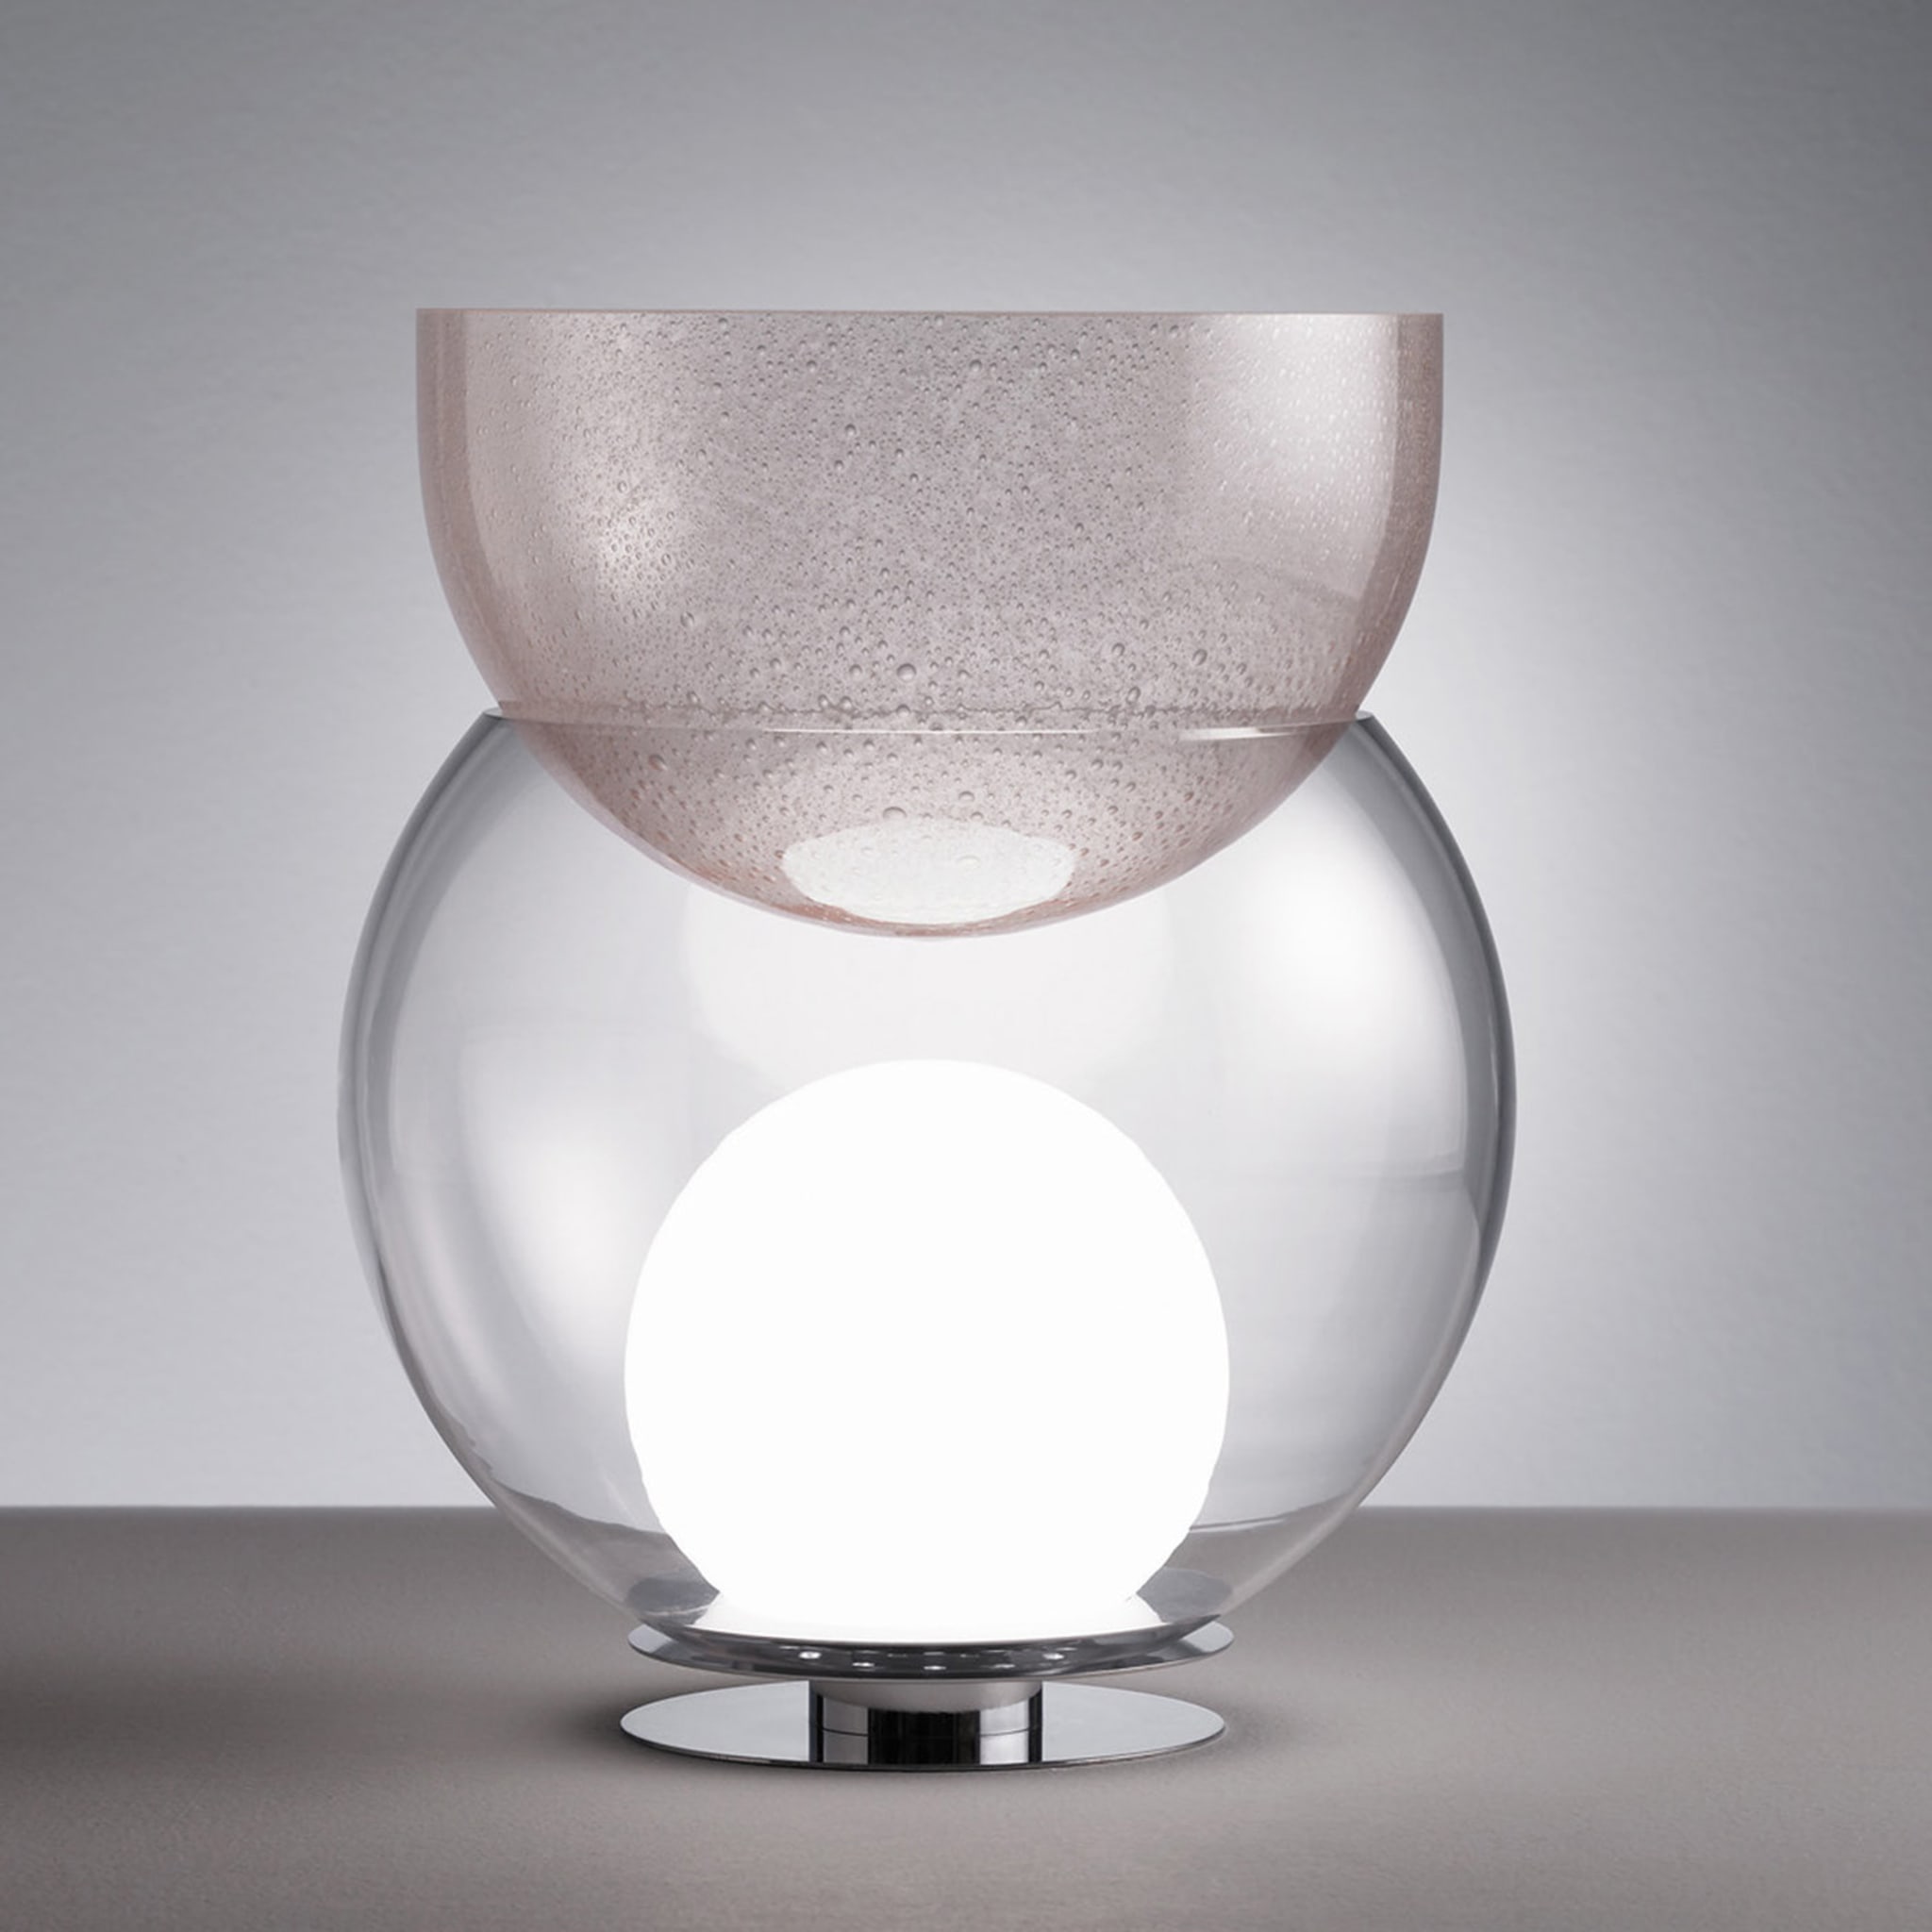 Giova Small Table Lamp by Gae Aulenti - Alternative view 1